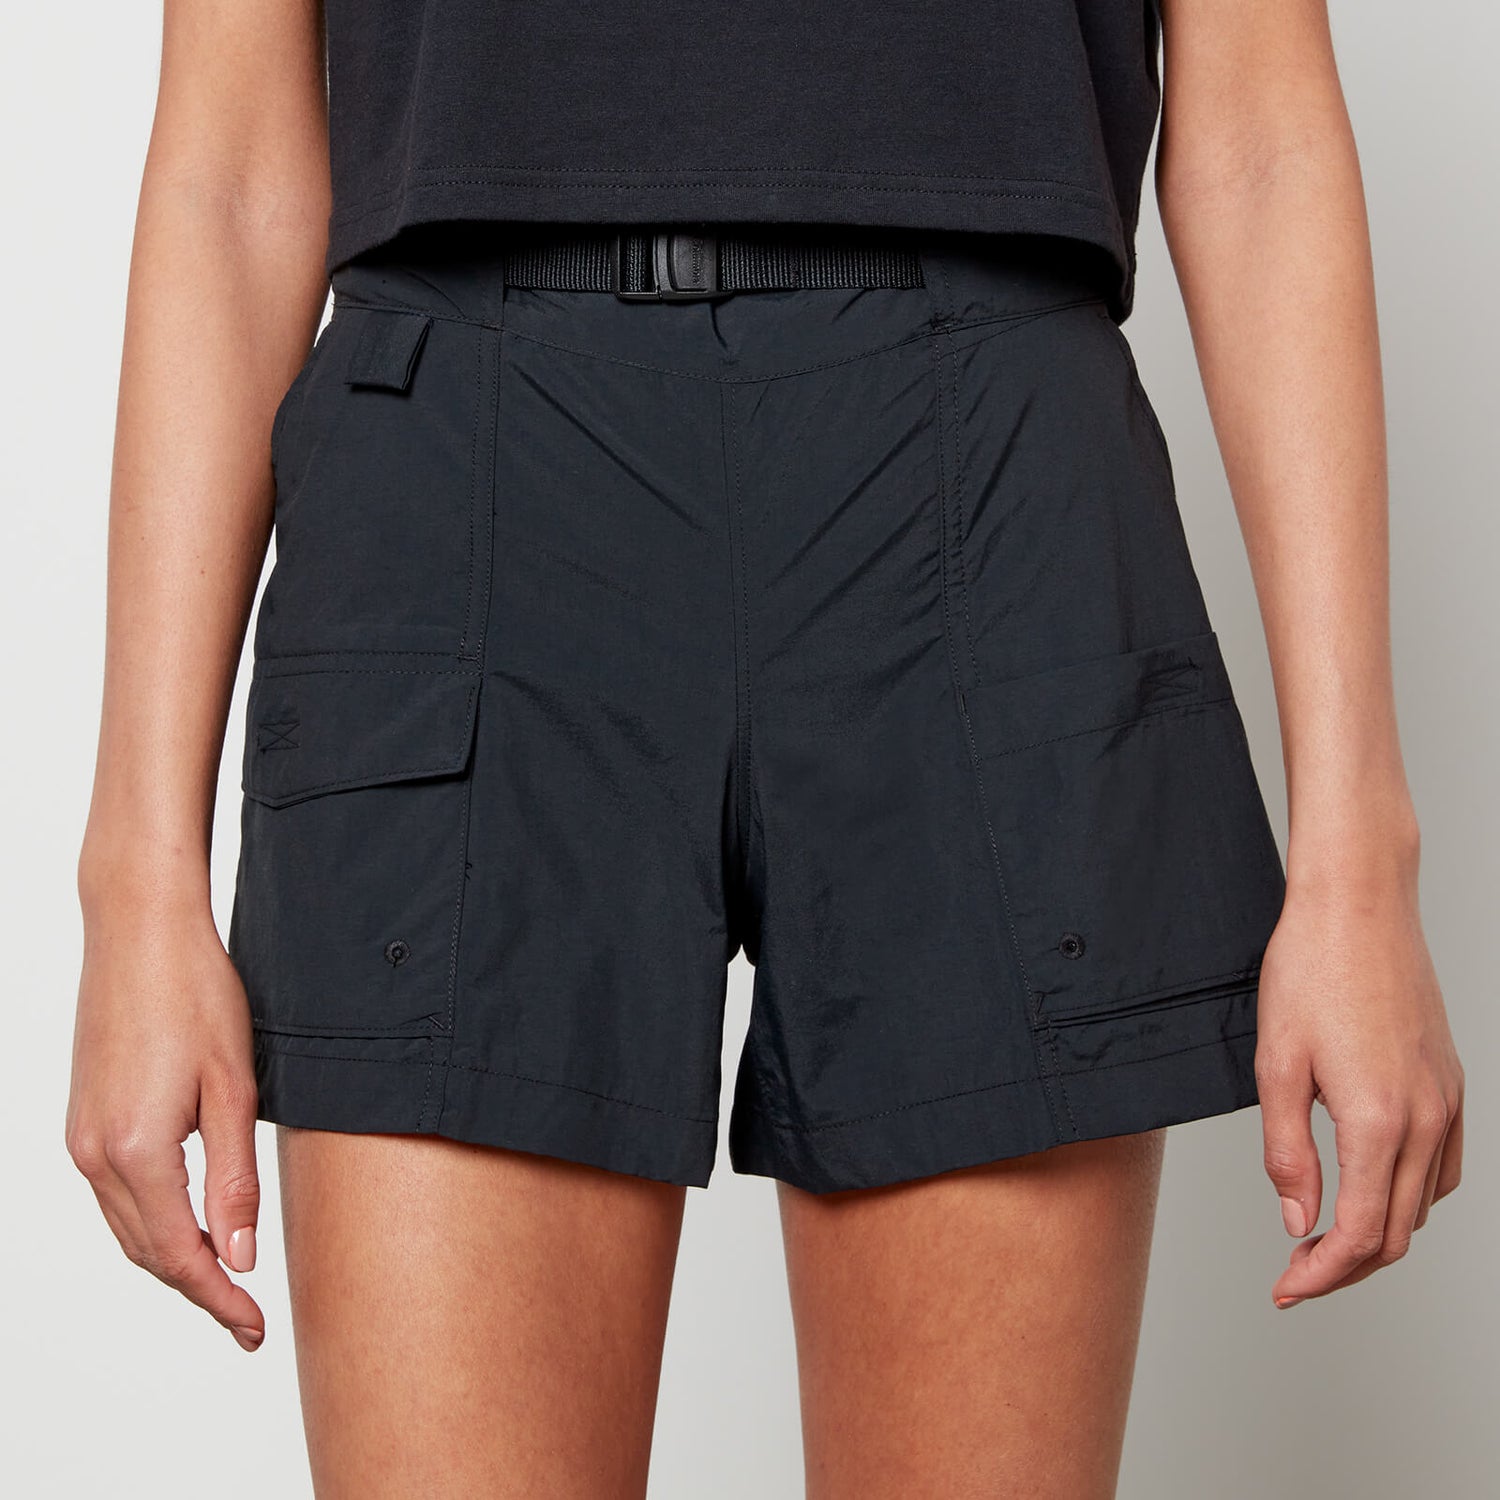 Columbia Women's W Summerdry Cargo Shorts - Black - XS